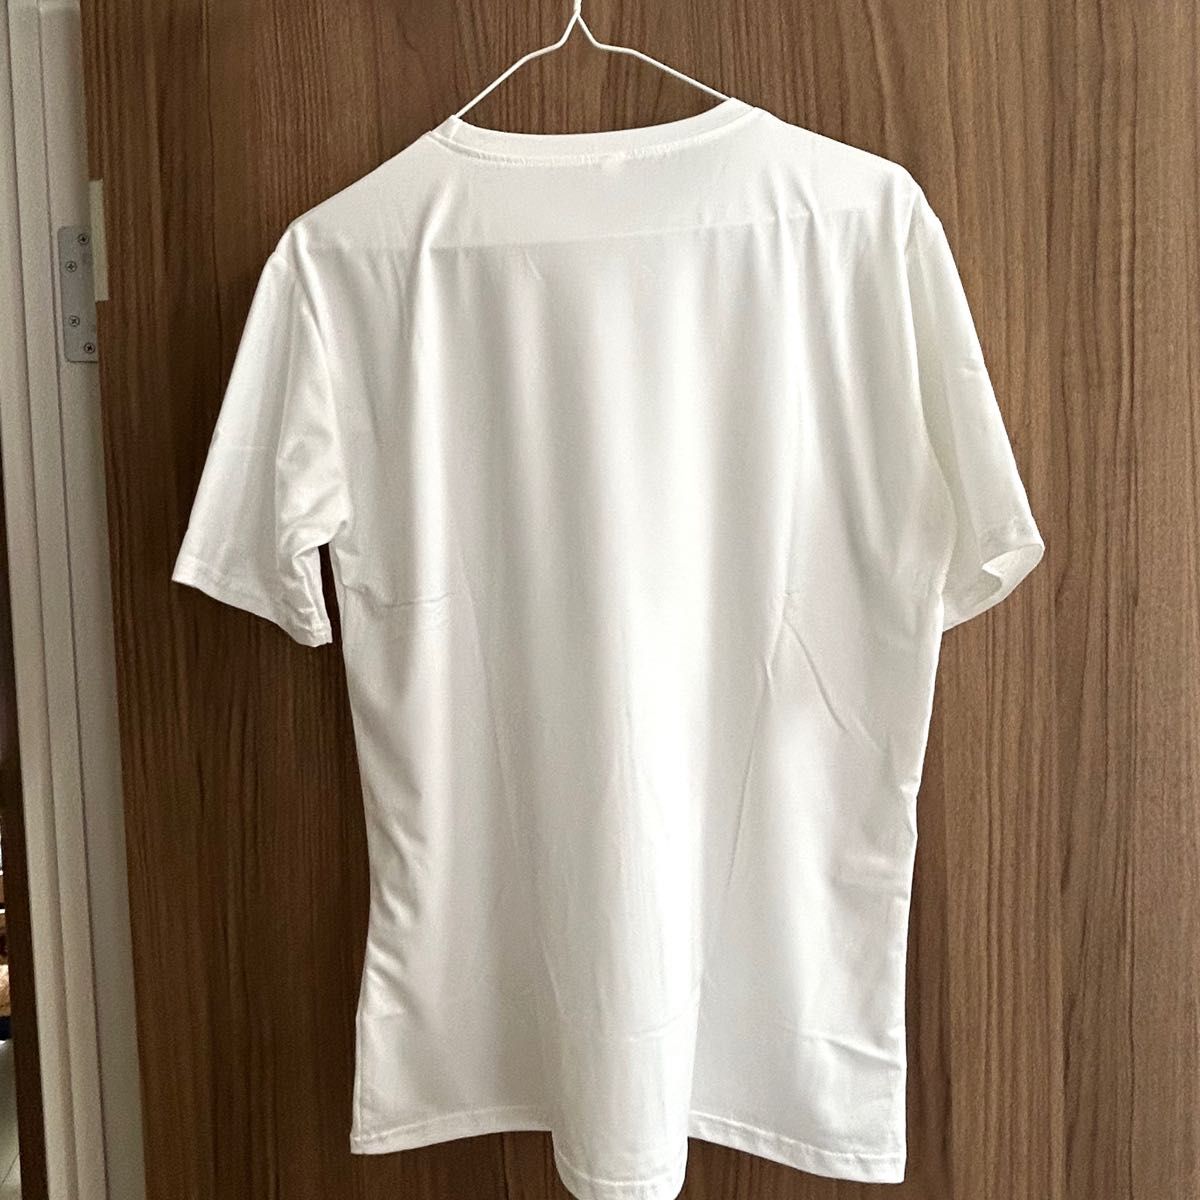 Tシャツ レディース 半袖 ホワイト プリント ヴィンテージ風 韓国ファッション ビックシルエット 体型カバー 夏 着回し 多機能